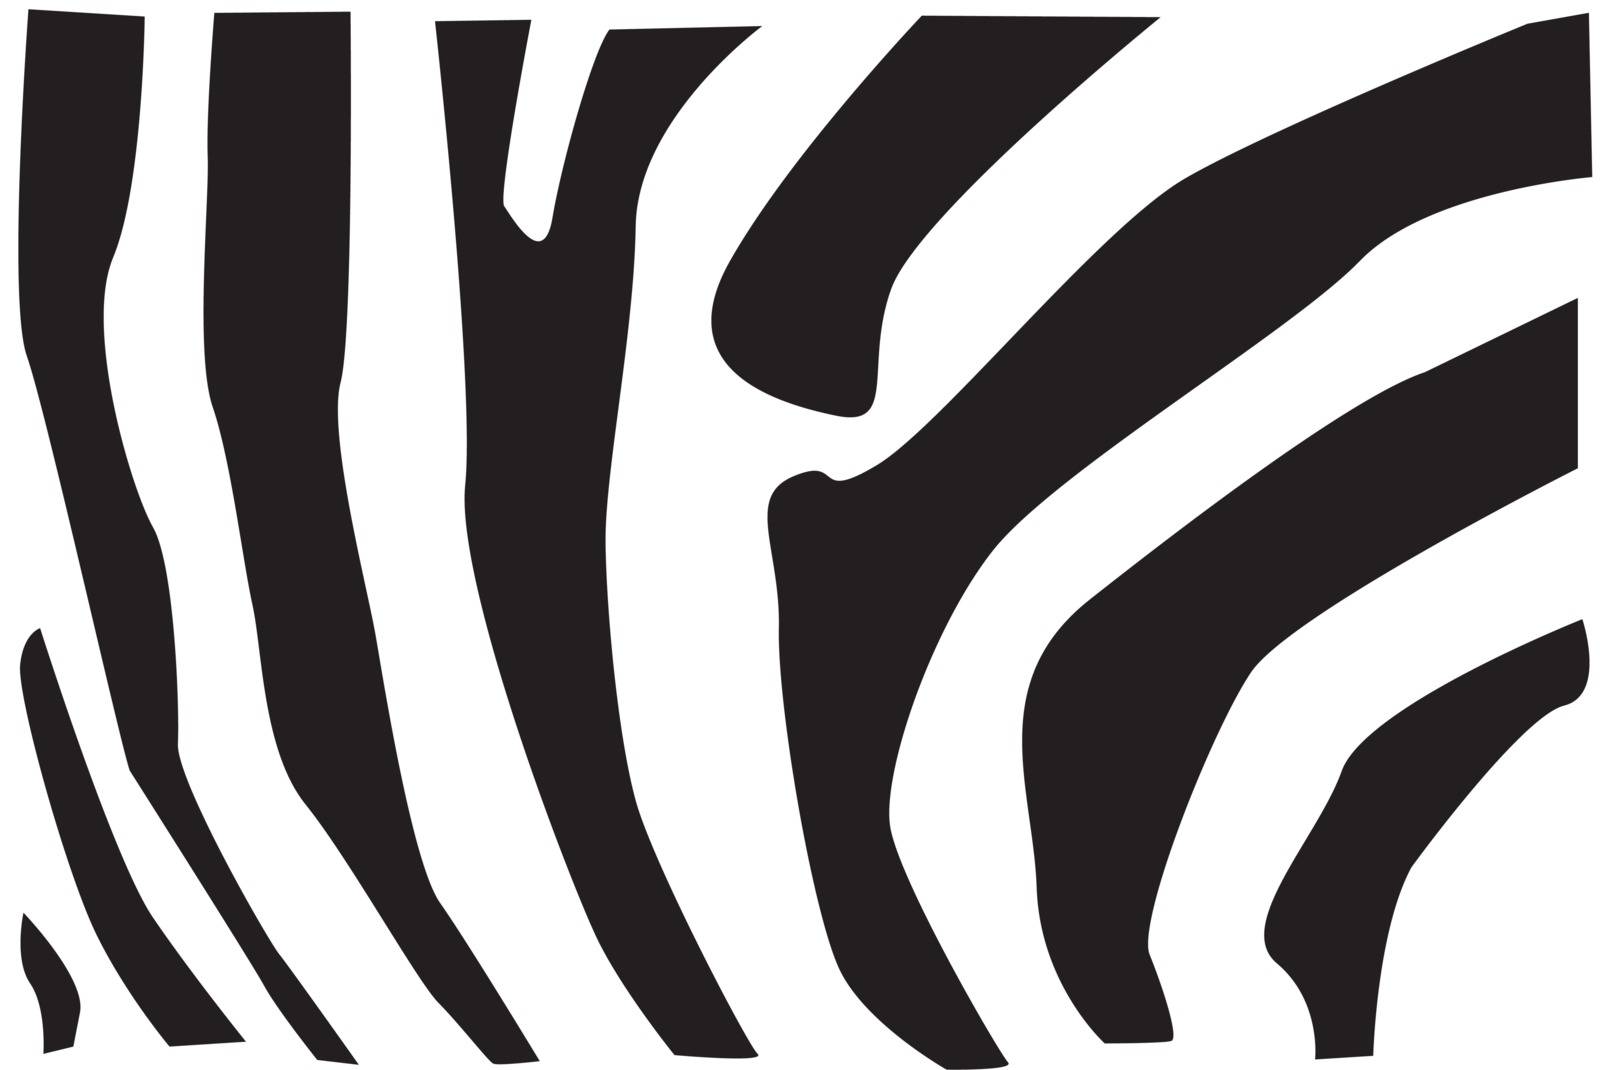 Zebra fur pattern by hamik